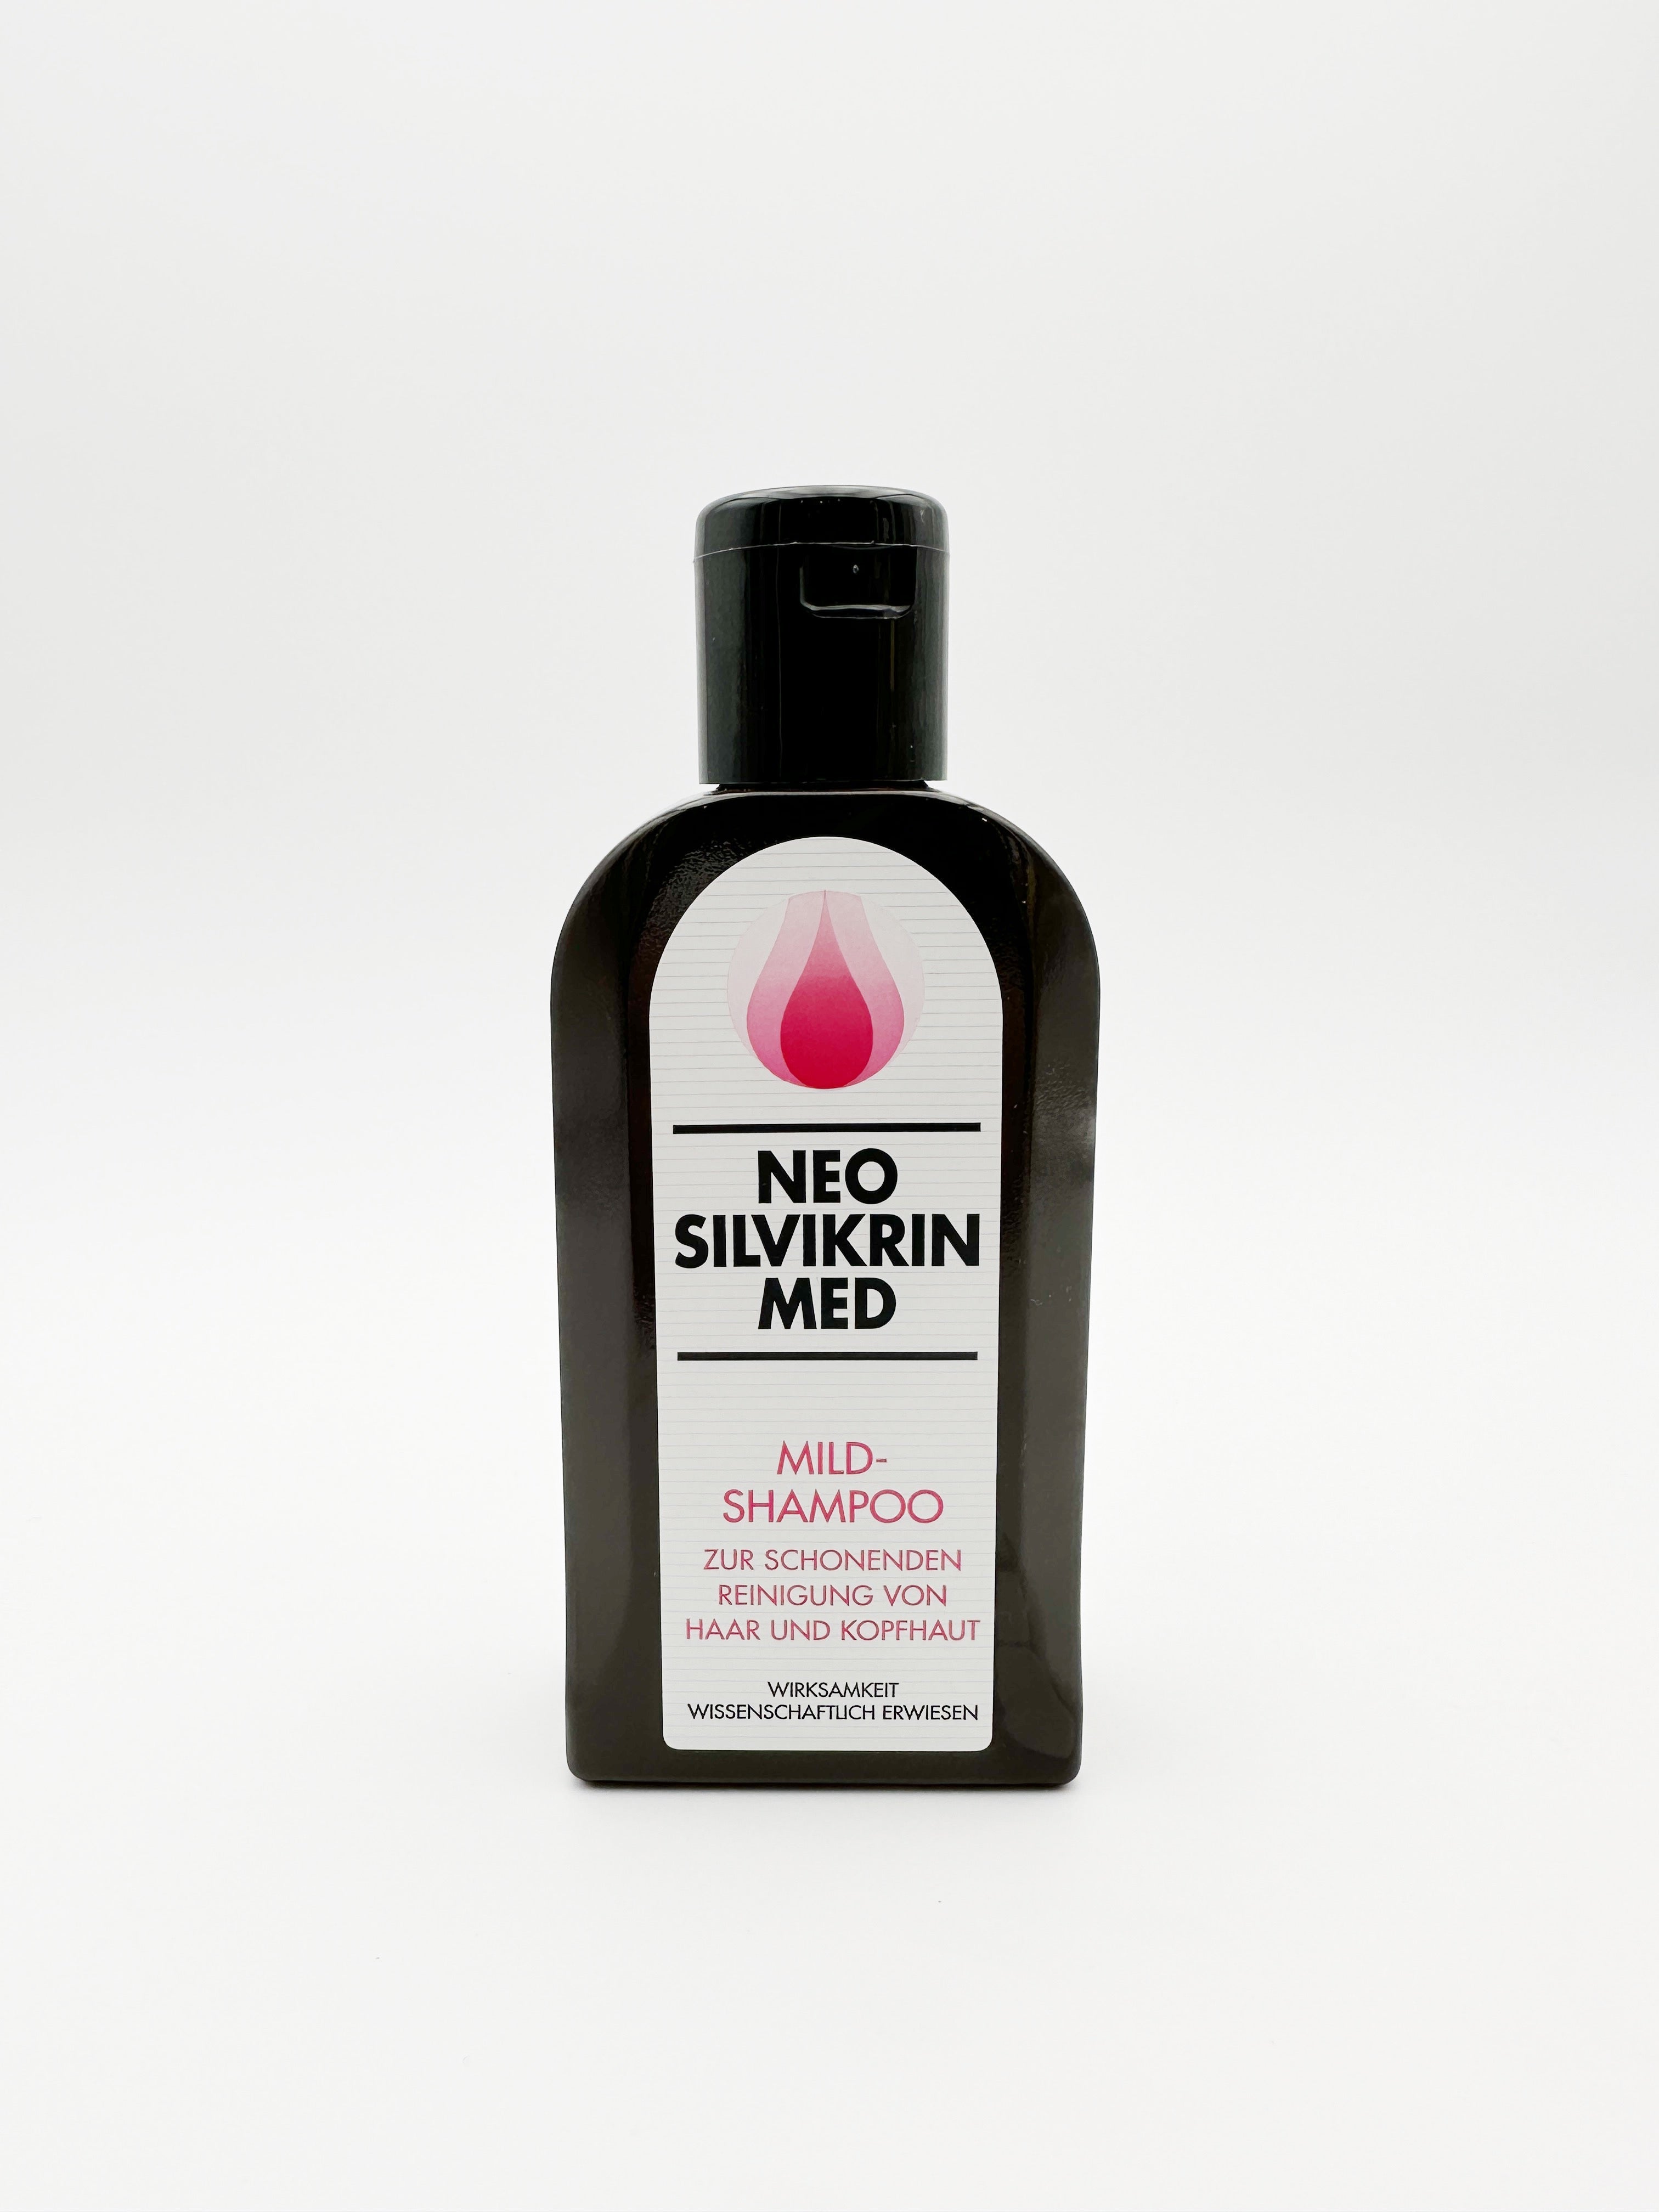 NEO Silvikrin MED Mild Shampoo 200ml